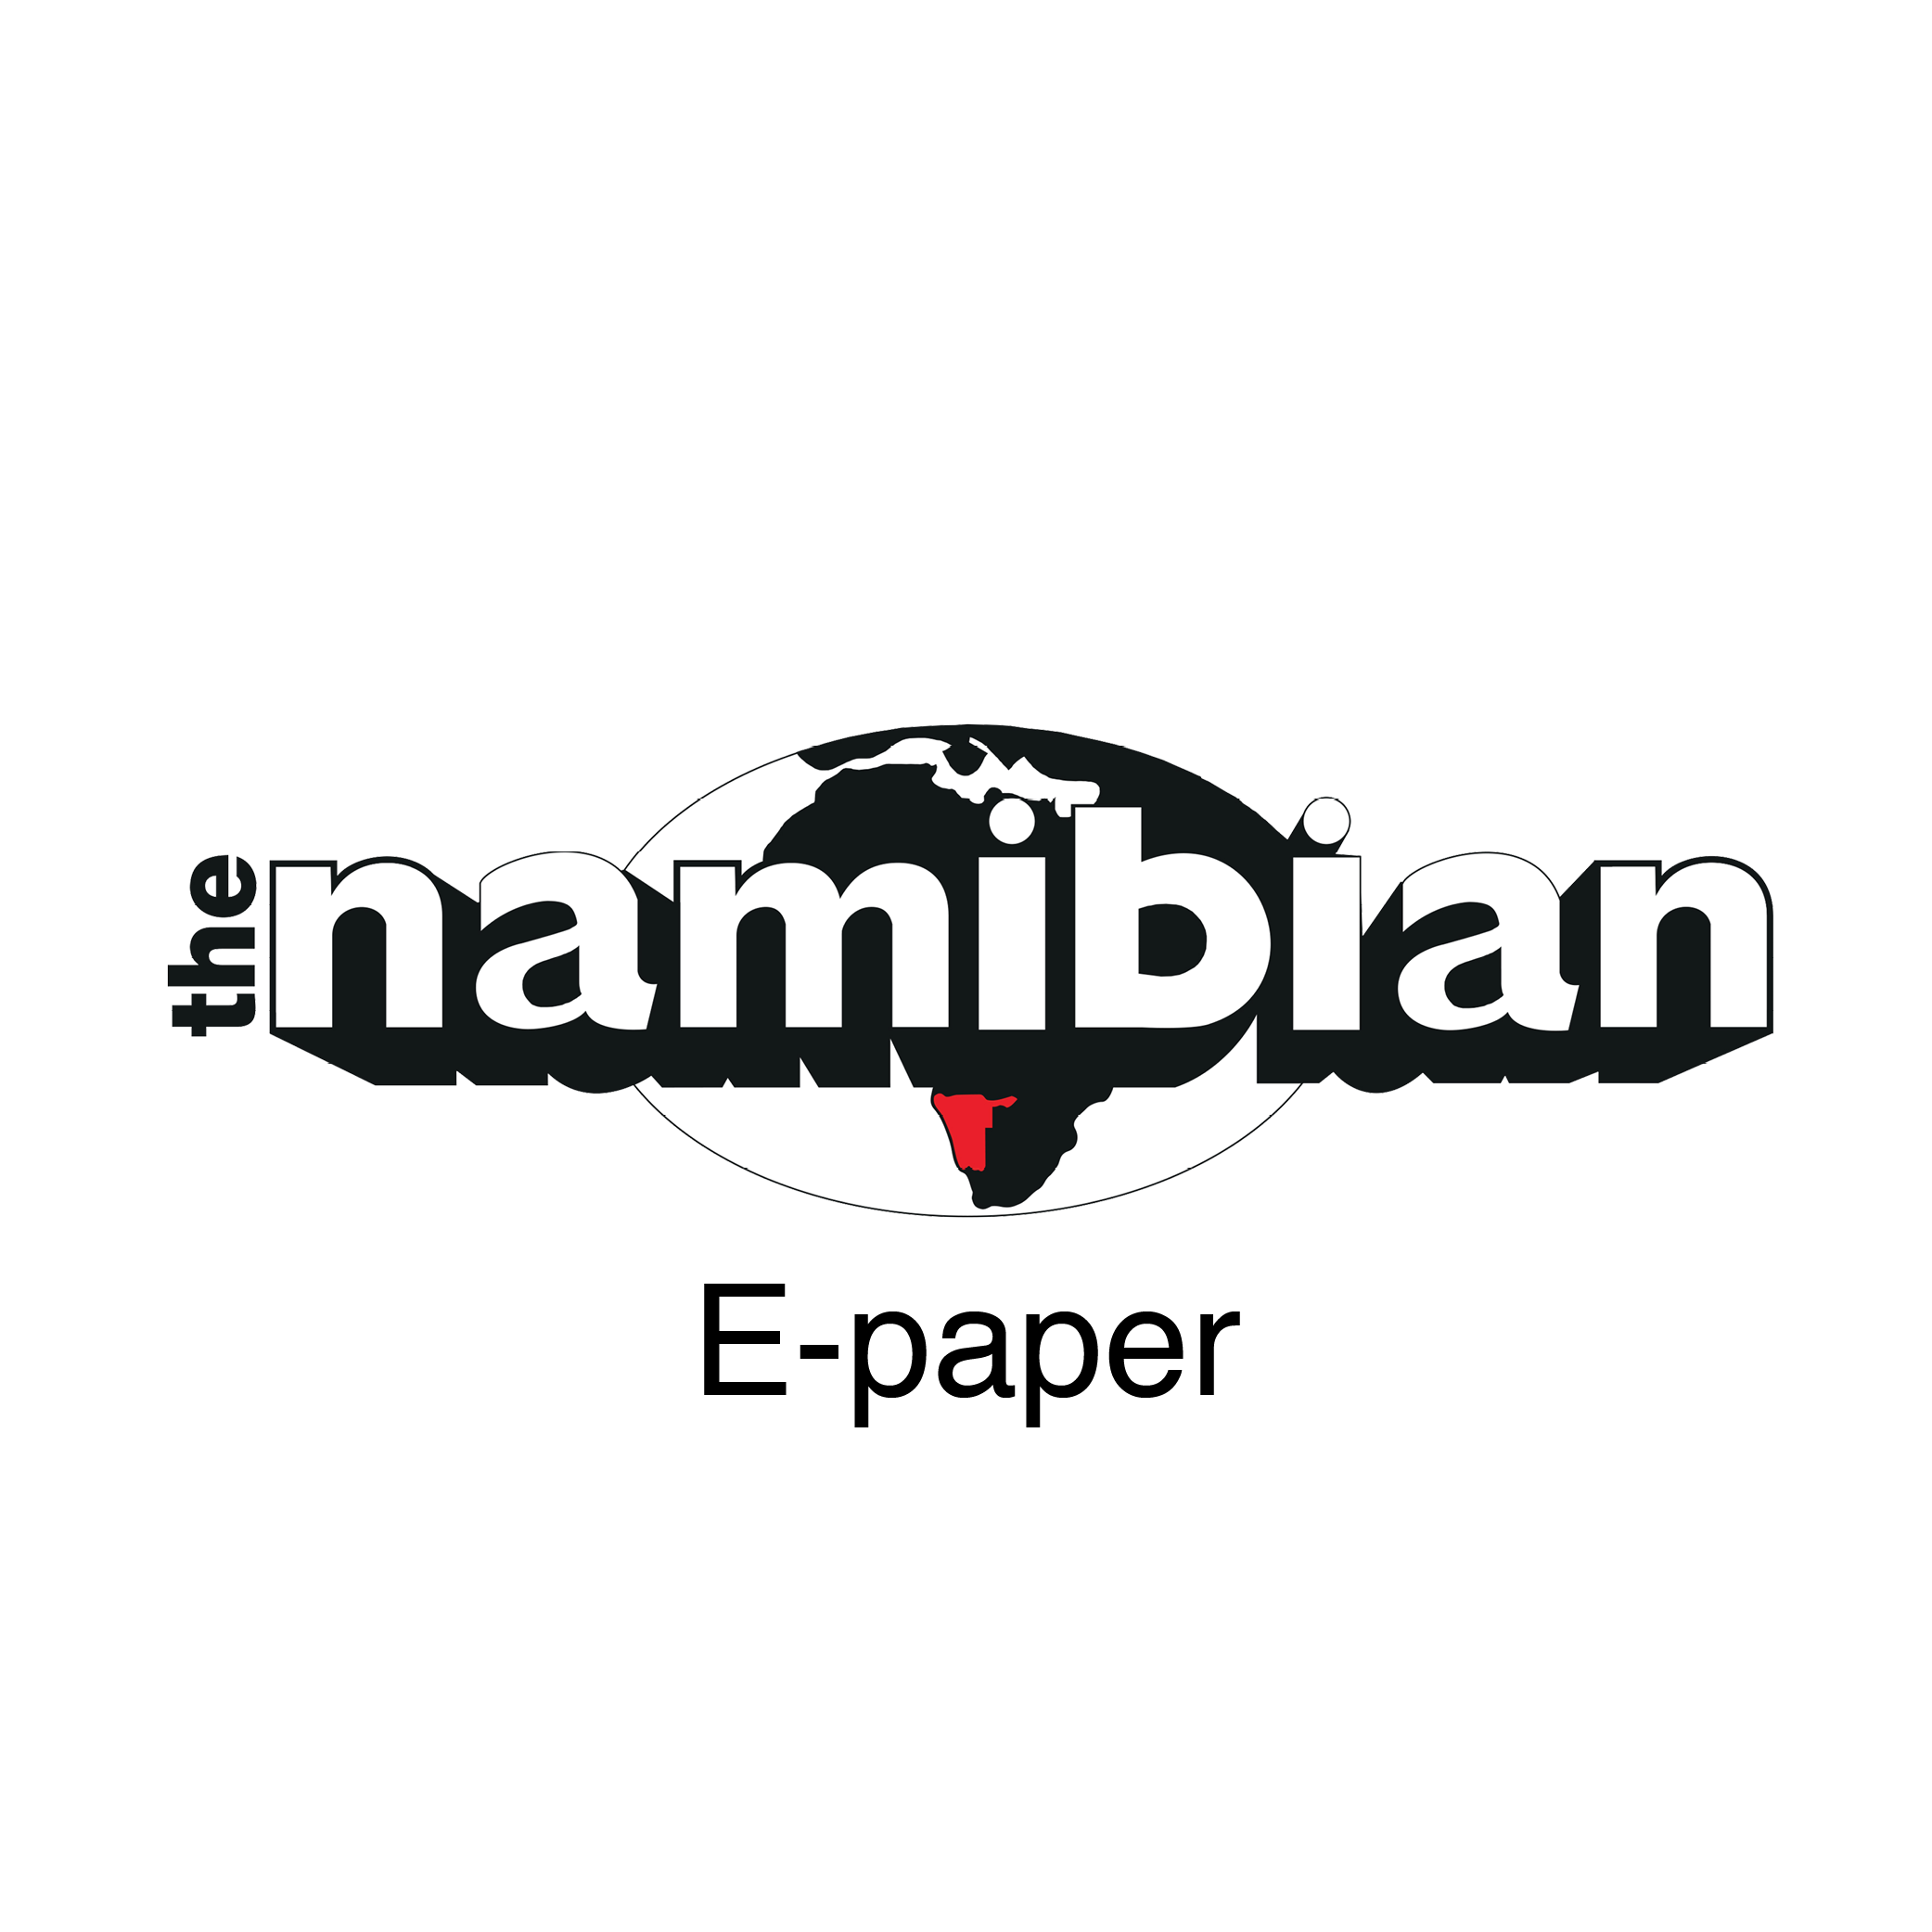 The Namibian Epaper